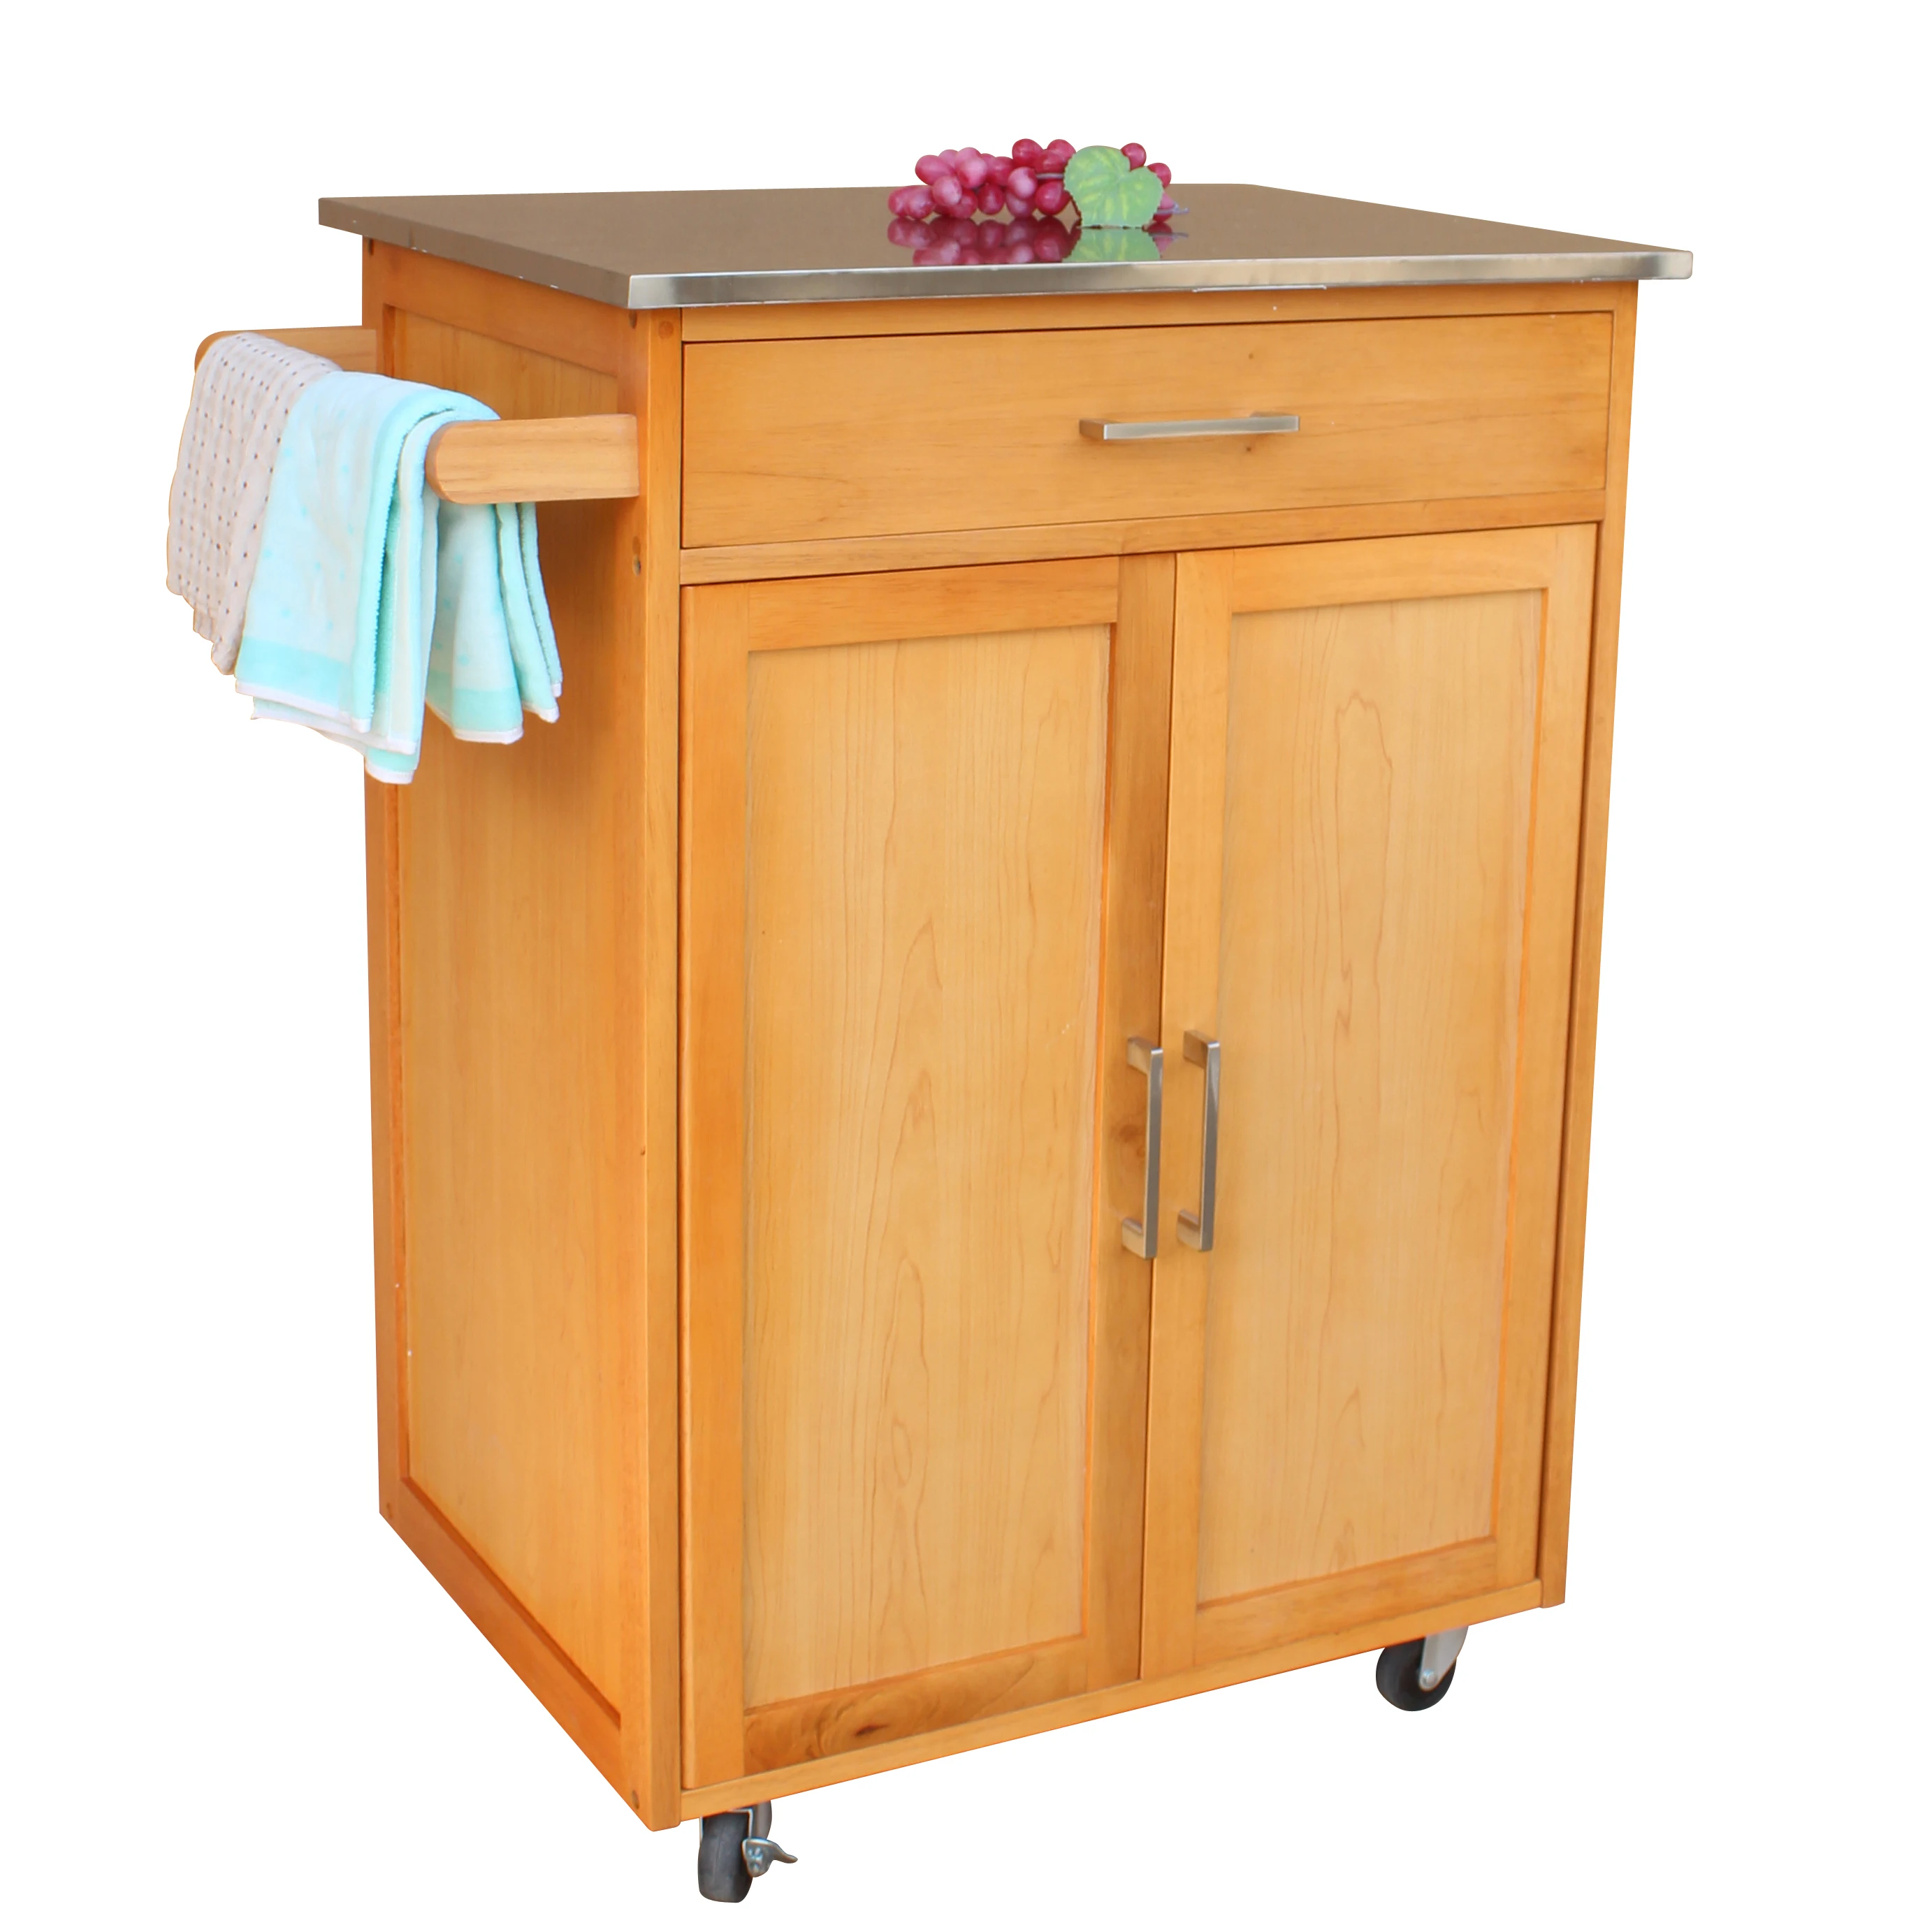 Wood Kitchen Trolley Furniture For Kitchen Storage Cabinet With Wheels Buy Kitchen Trolley Furniture